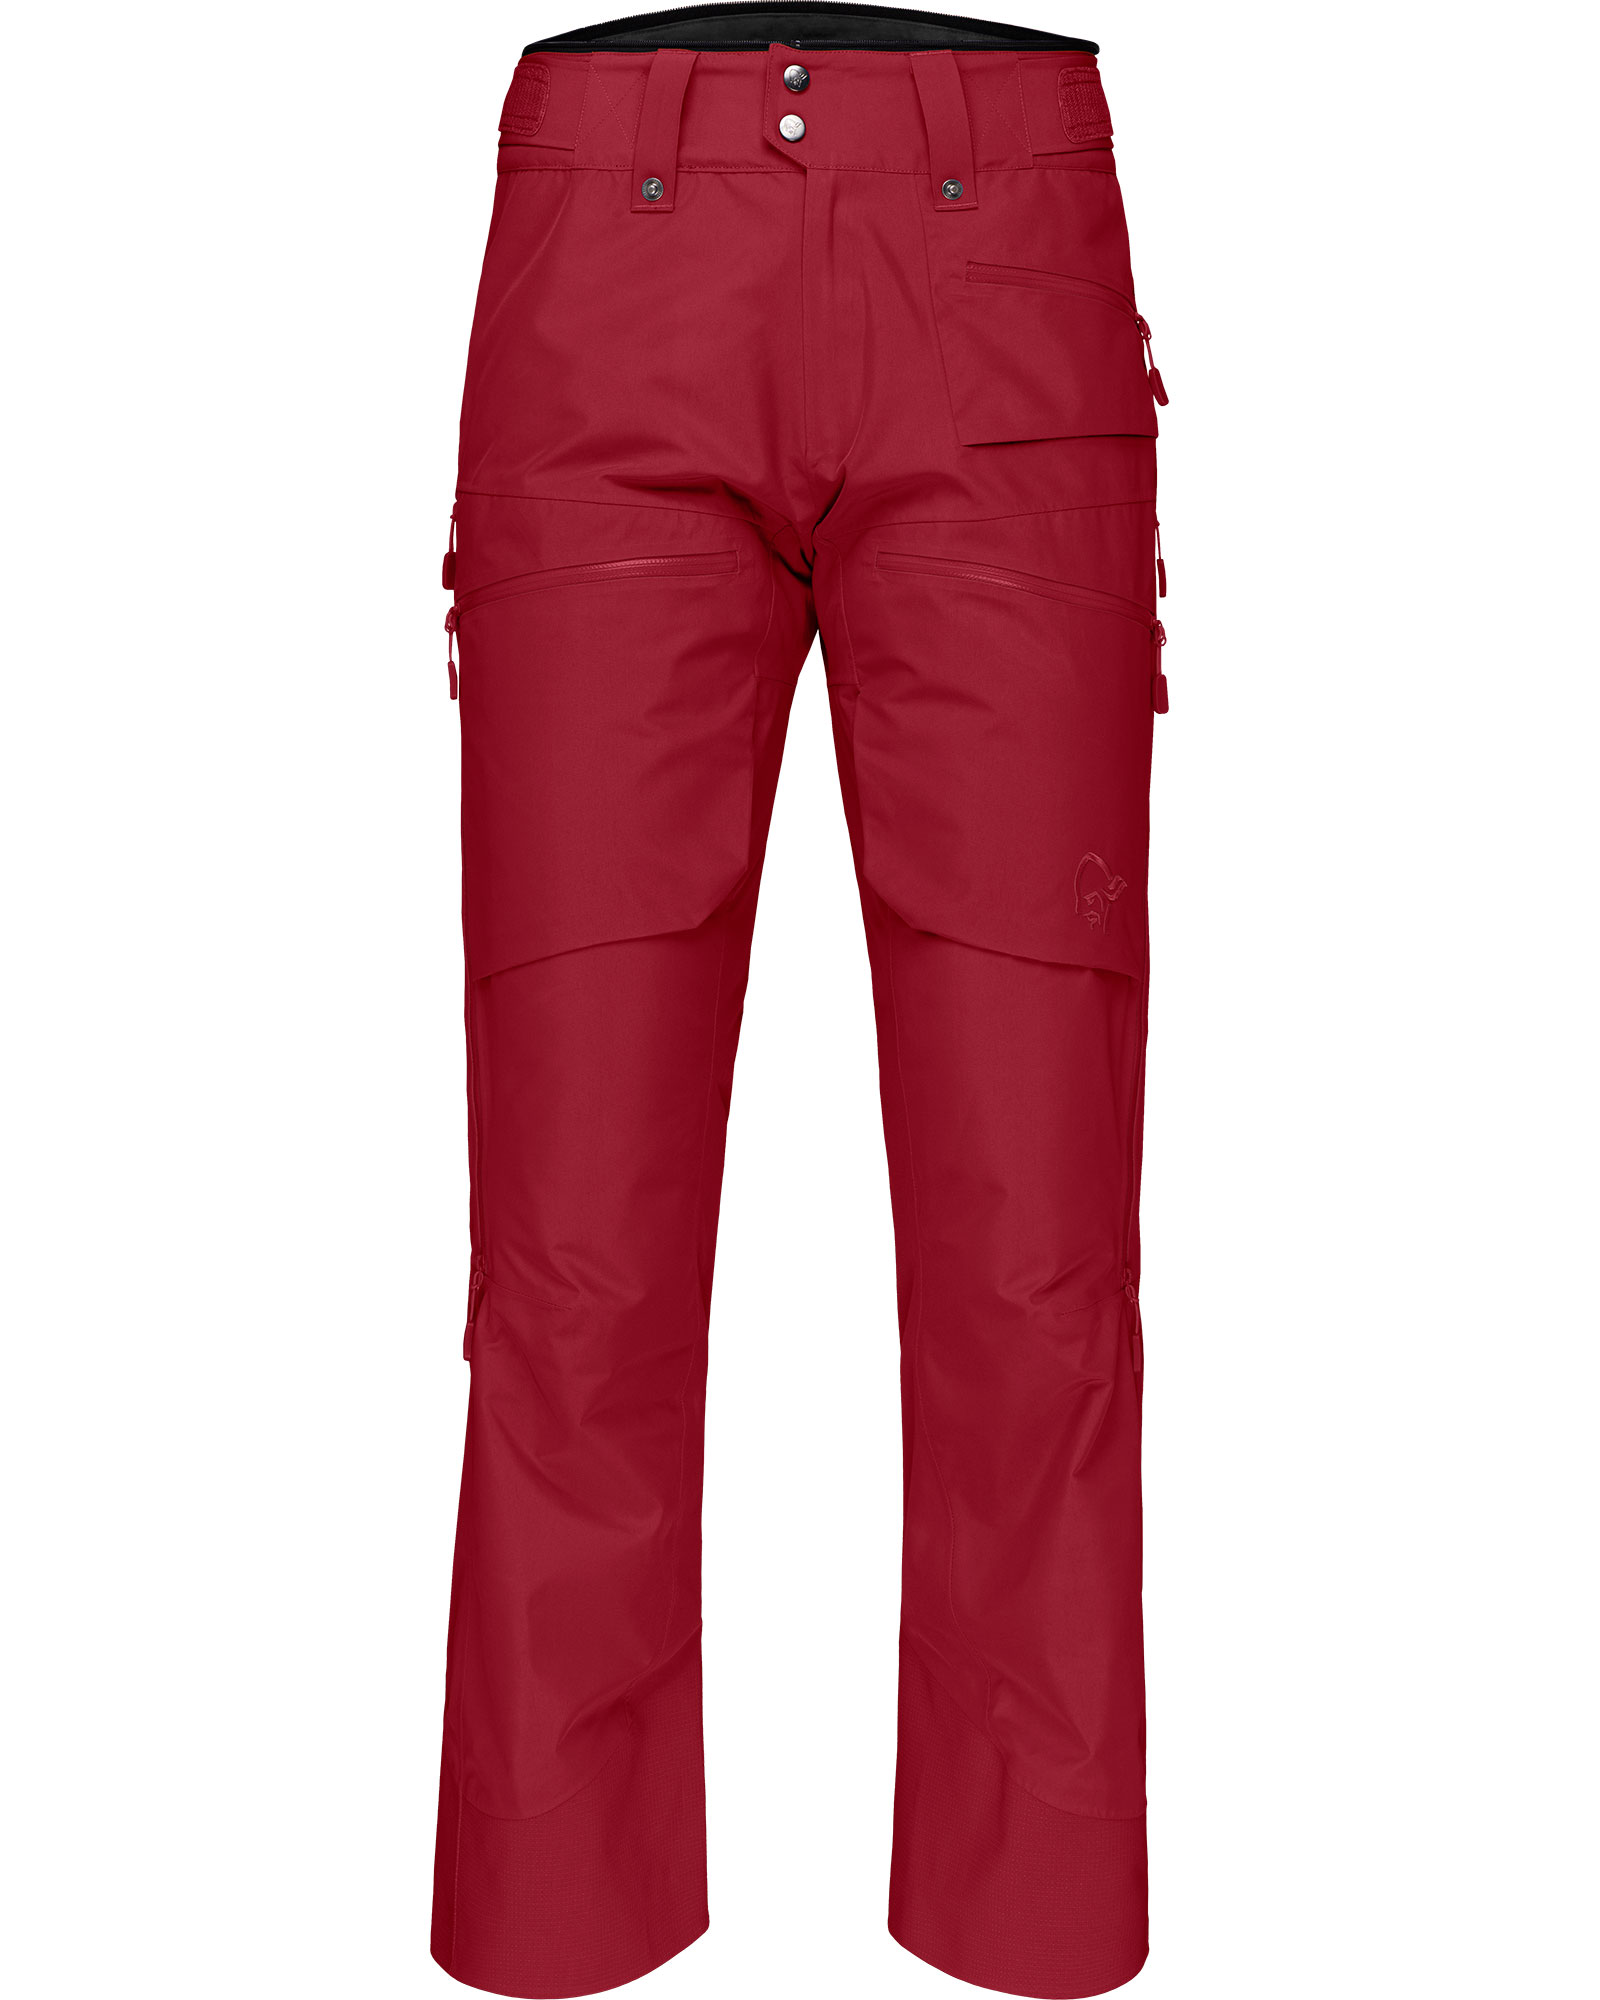 Norrona Lofoten GORE TEX Insulated Men’s Pants - Rhubarb XL